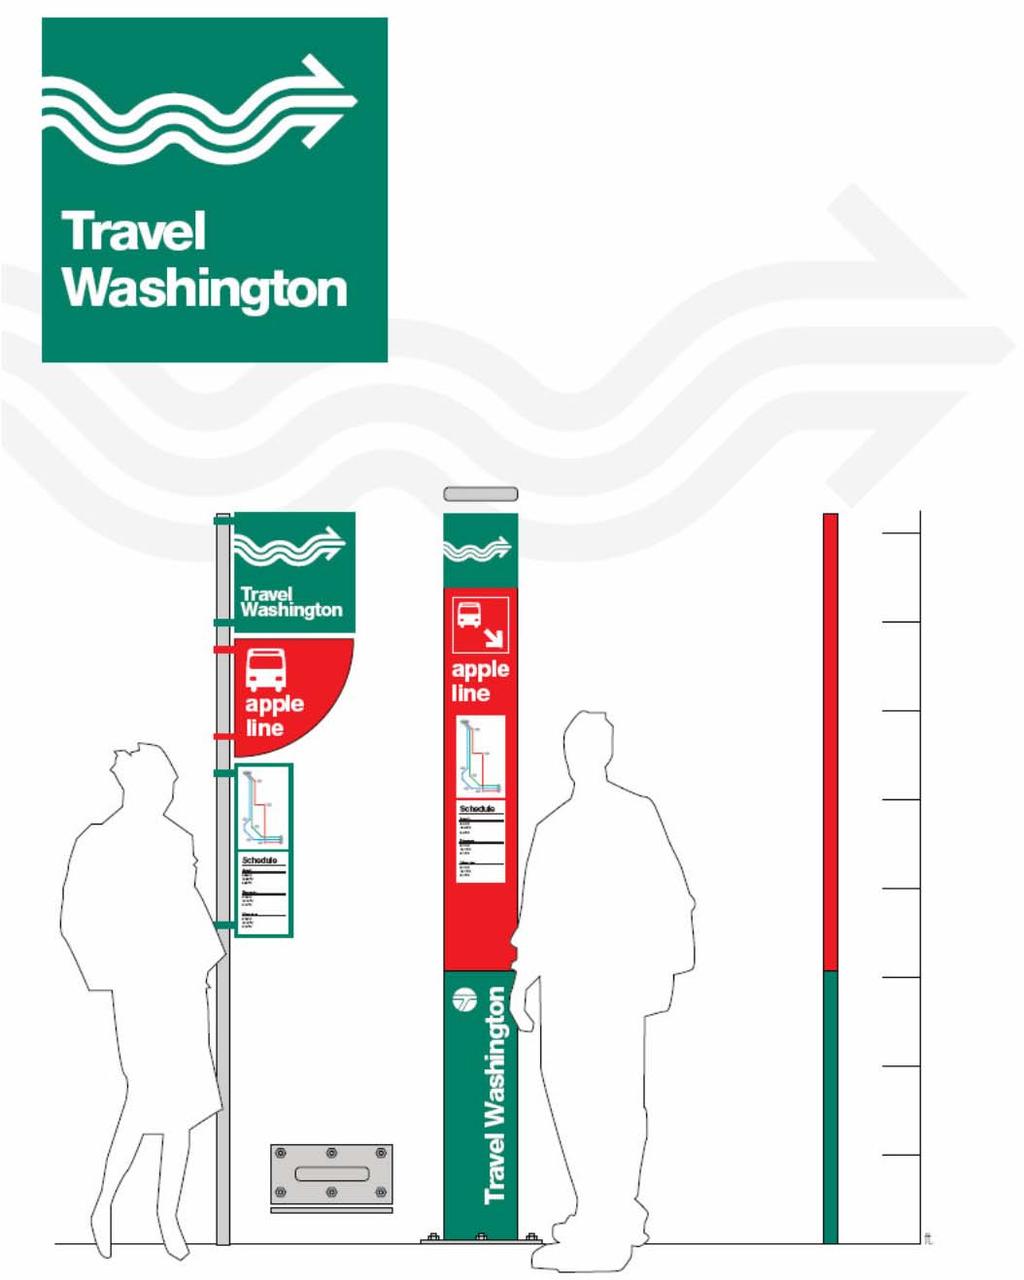 Travel Washington branding for all routes Individual regional